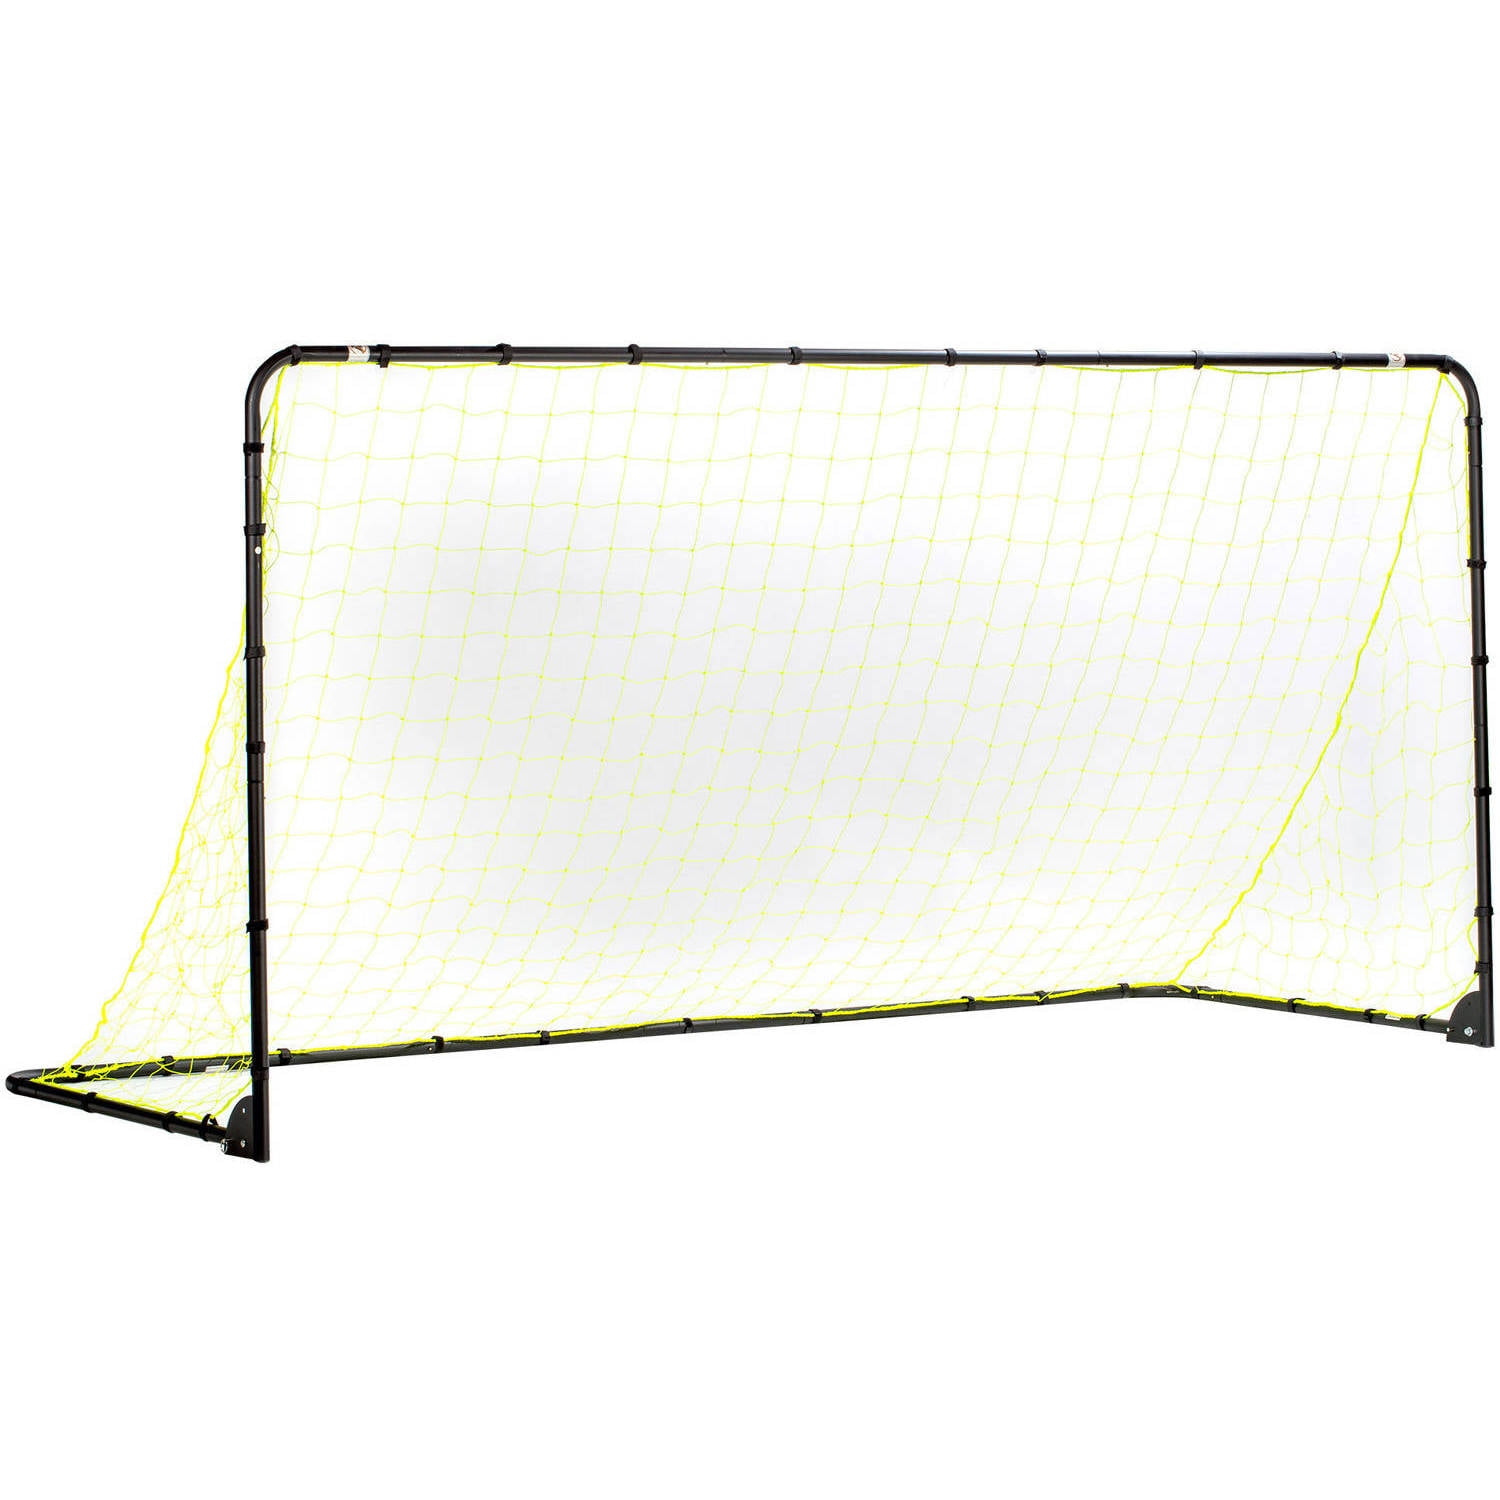 Future Stars 7ft Flex Soccer Goal Combo Set - 1 7ft Flex Net, 4 